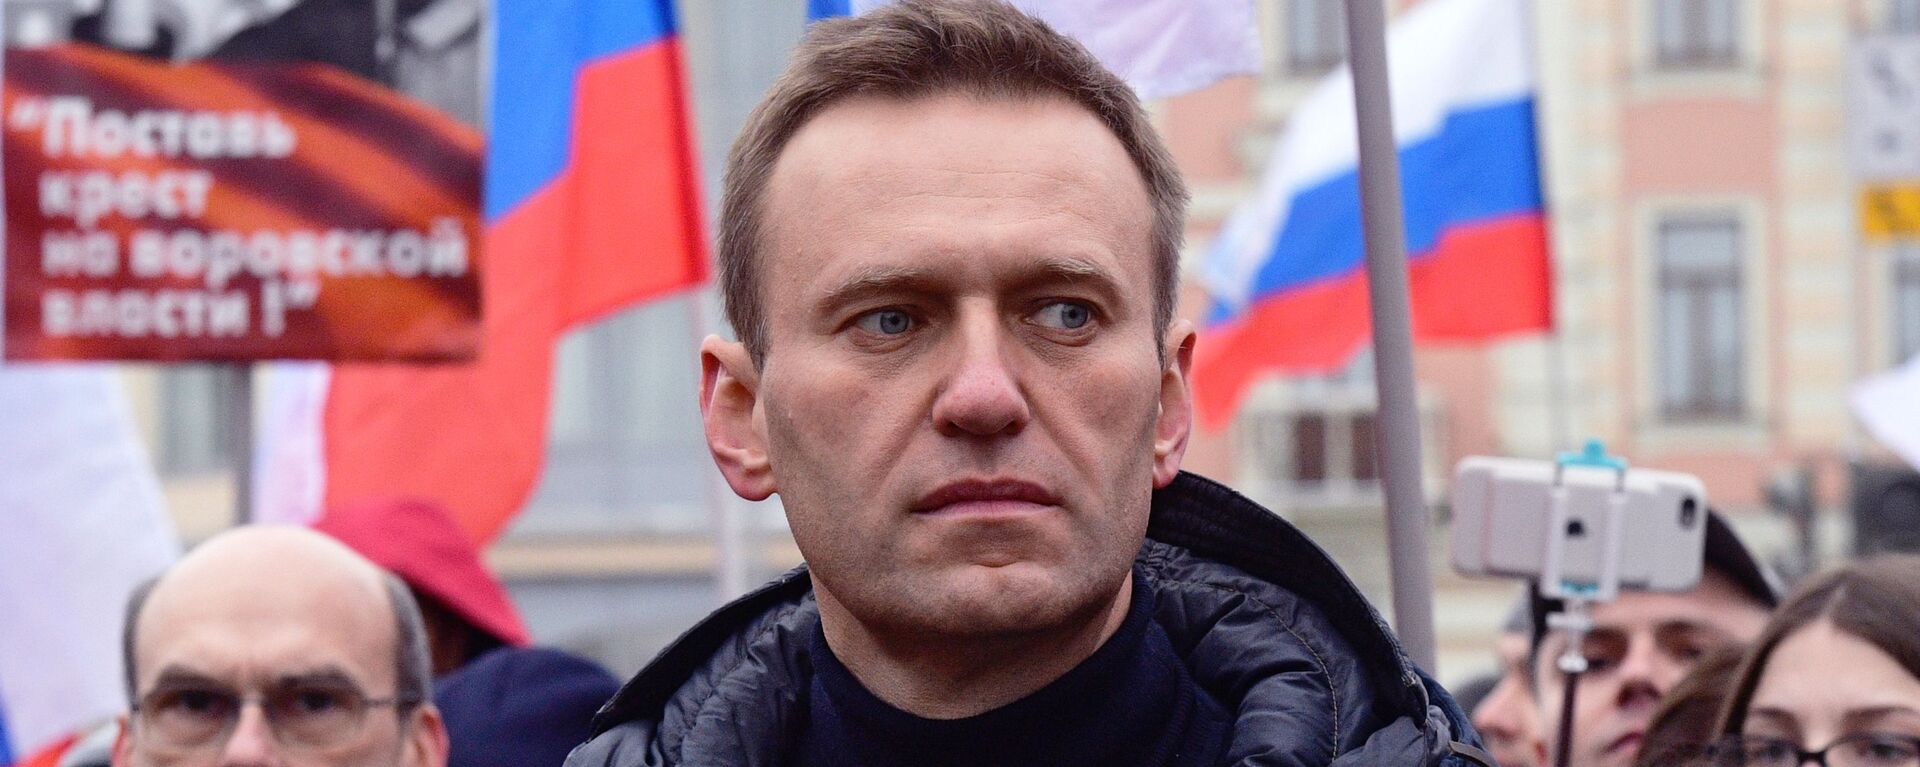 Alexéi Navalni, activista opositor ruso (archivo) - Sputnik Mundo, 1920, 23.01.2021